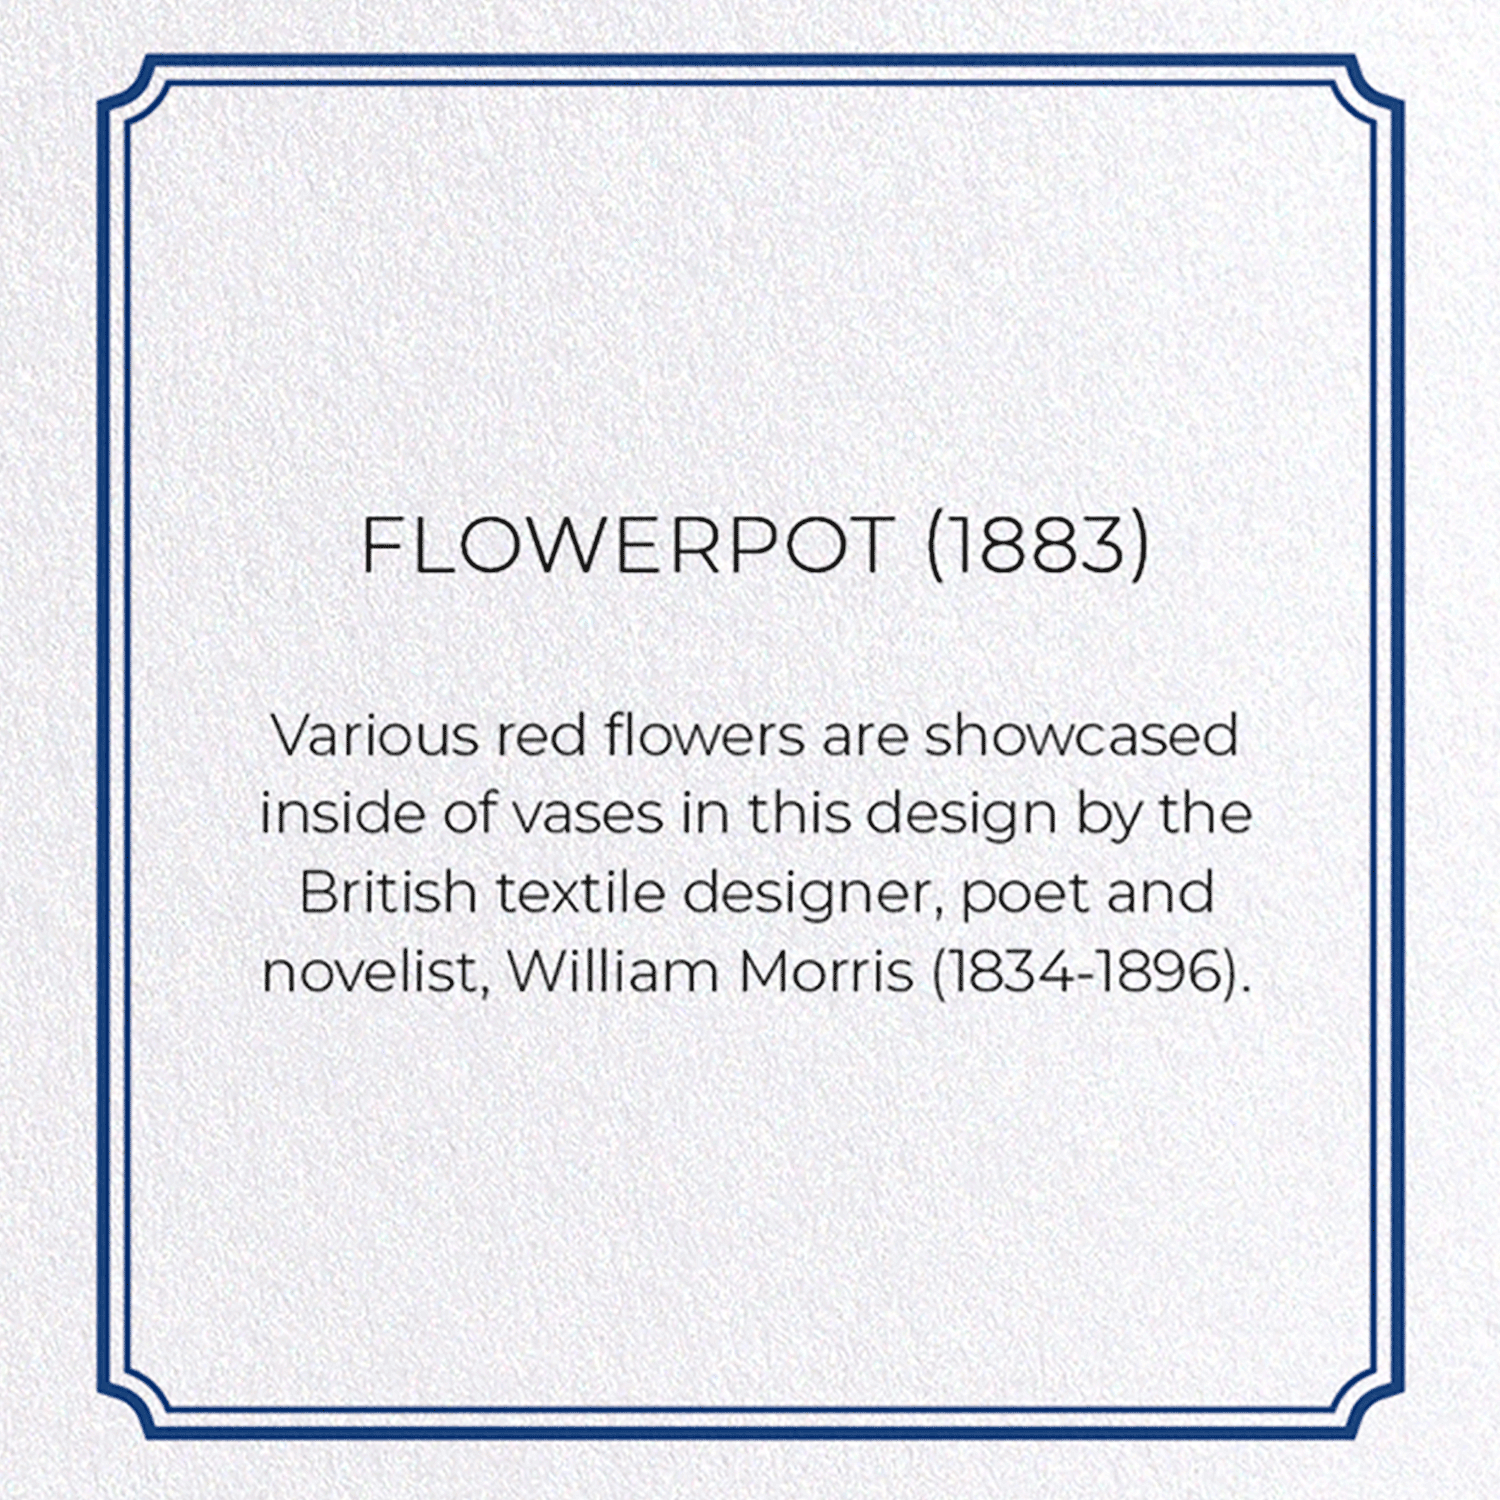 FLOWERPOT (1883): Pattern Greeting Card